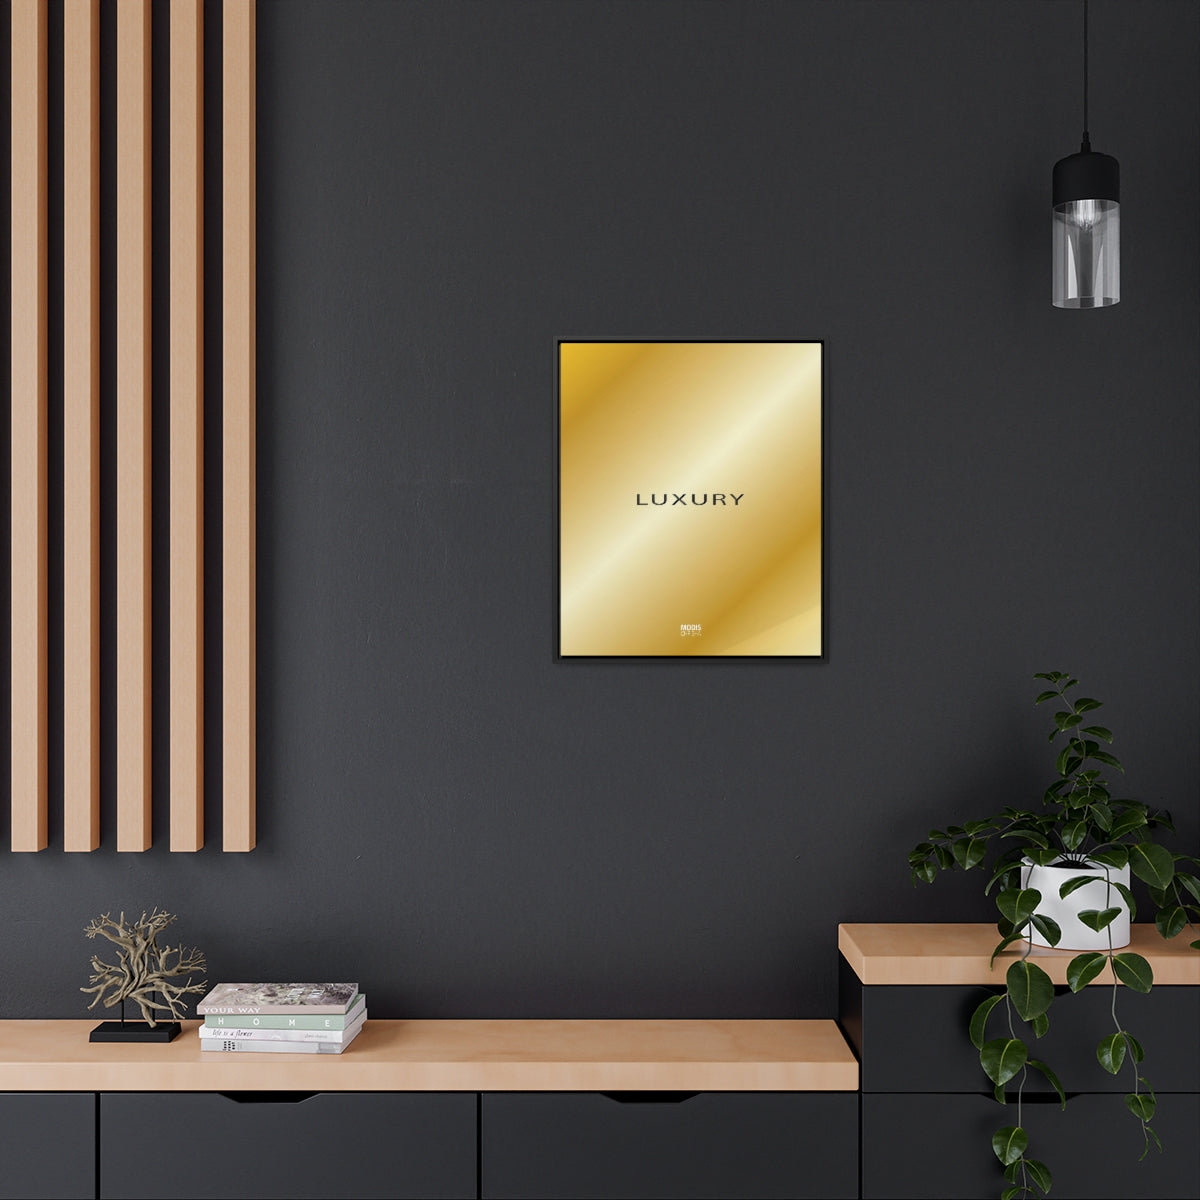 Canvas Gallery Wraps Frame Vertical 20“ x 24“ - Design Luxury